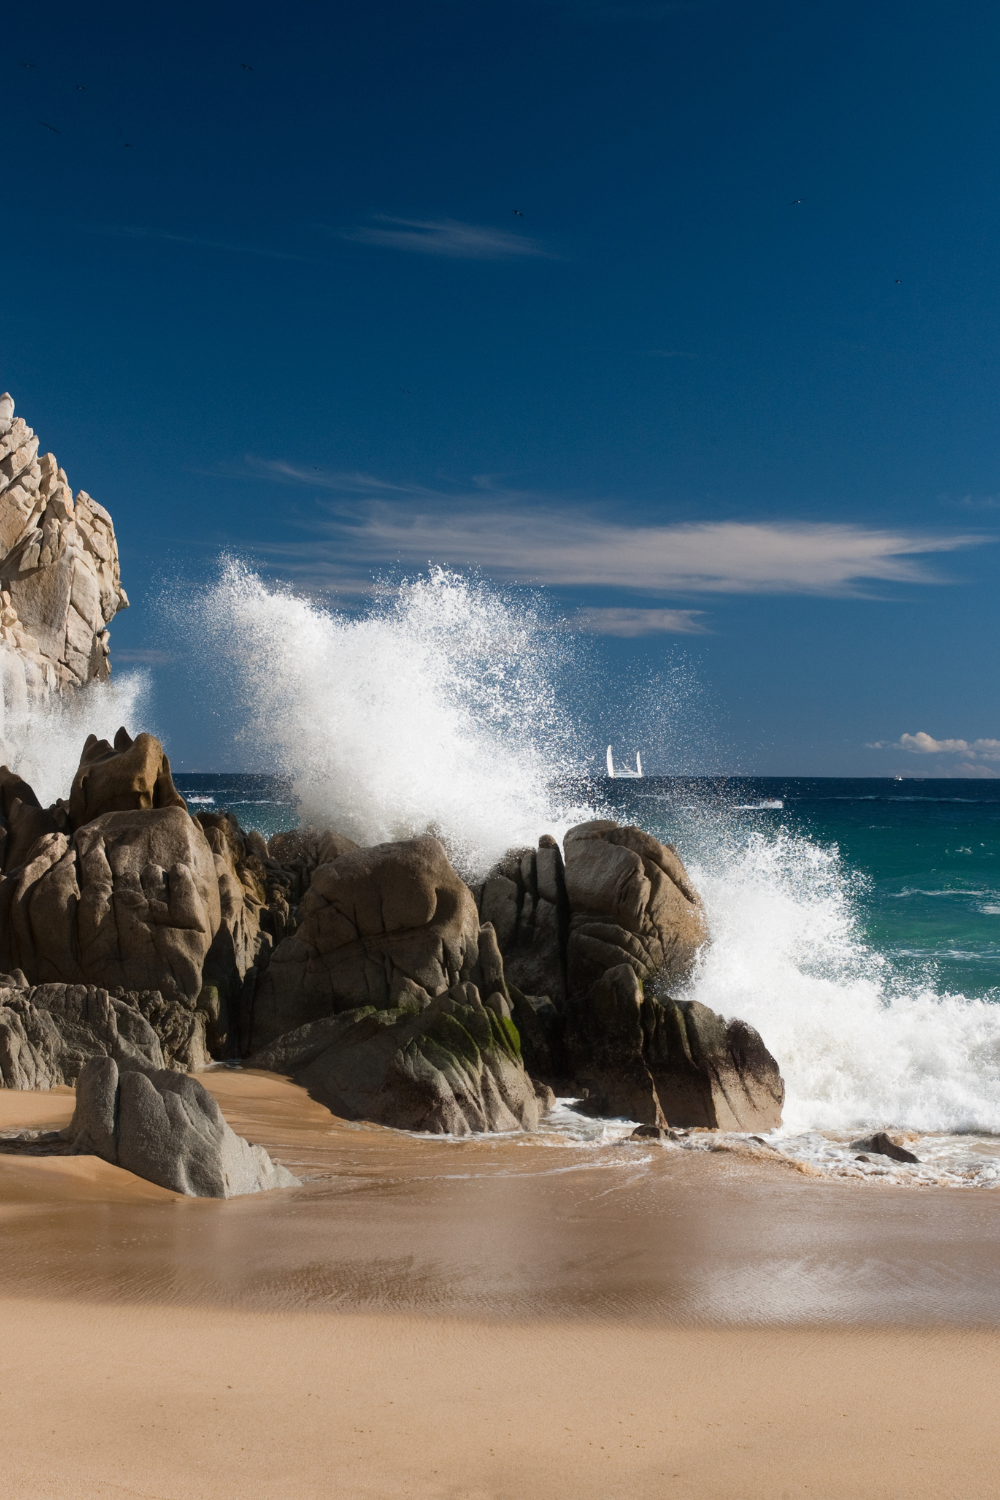 Waves crashing into rocks on beach shore